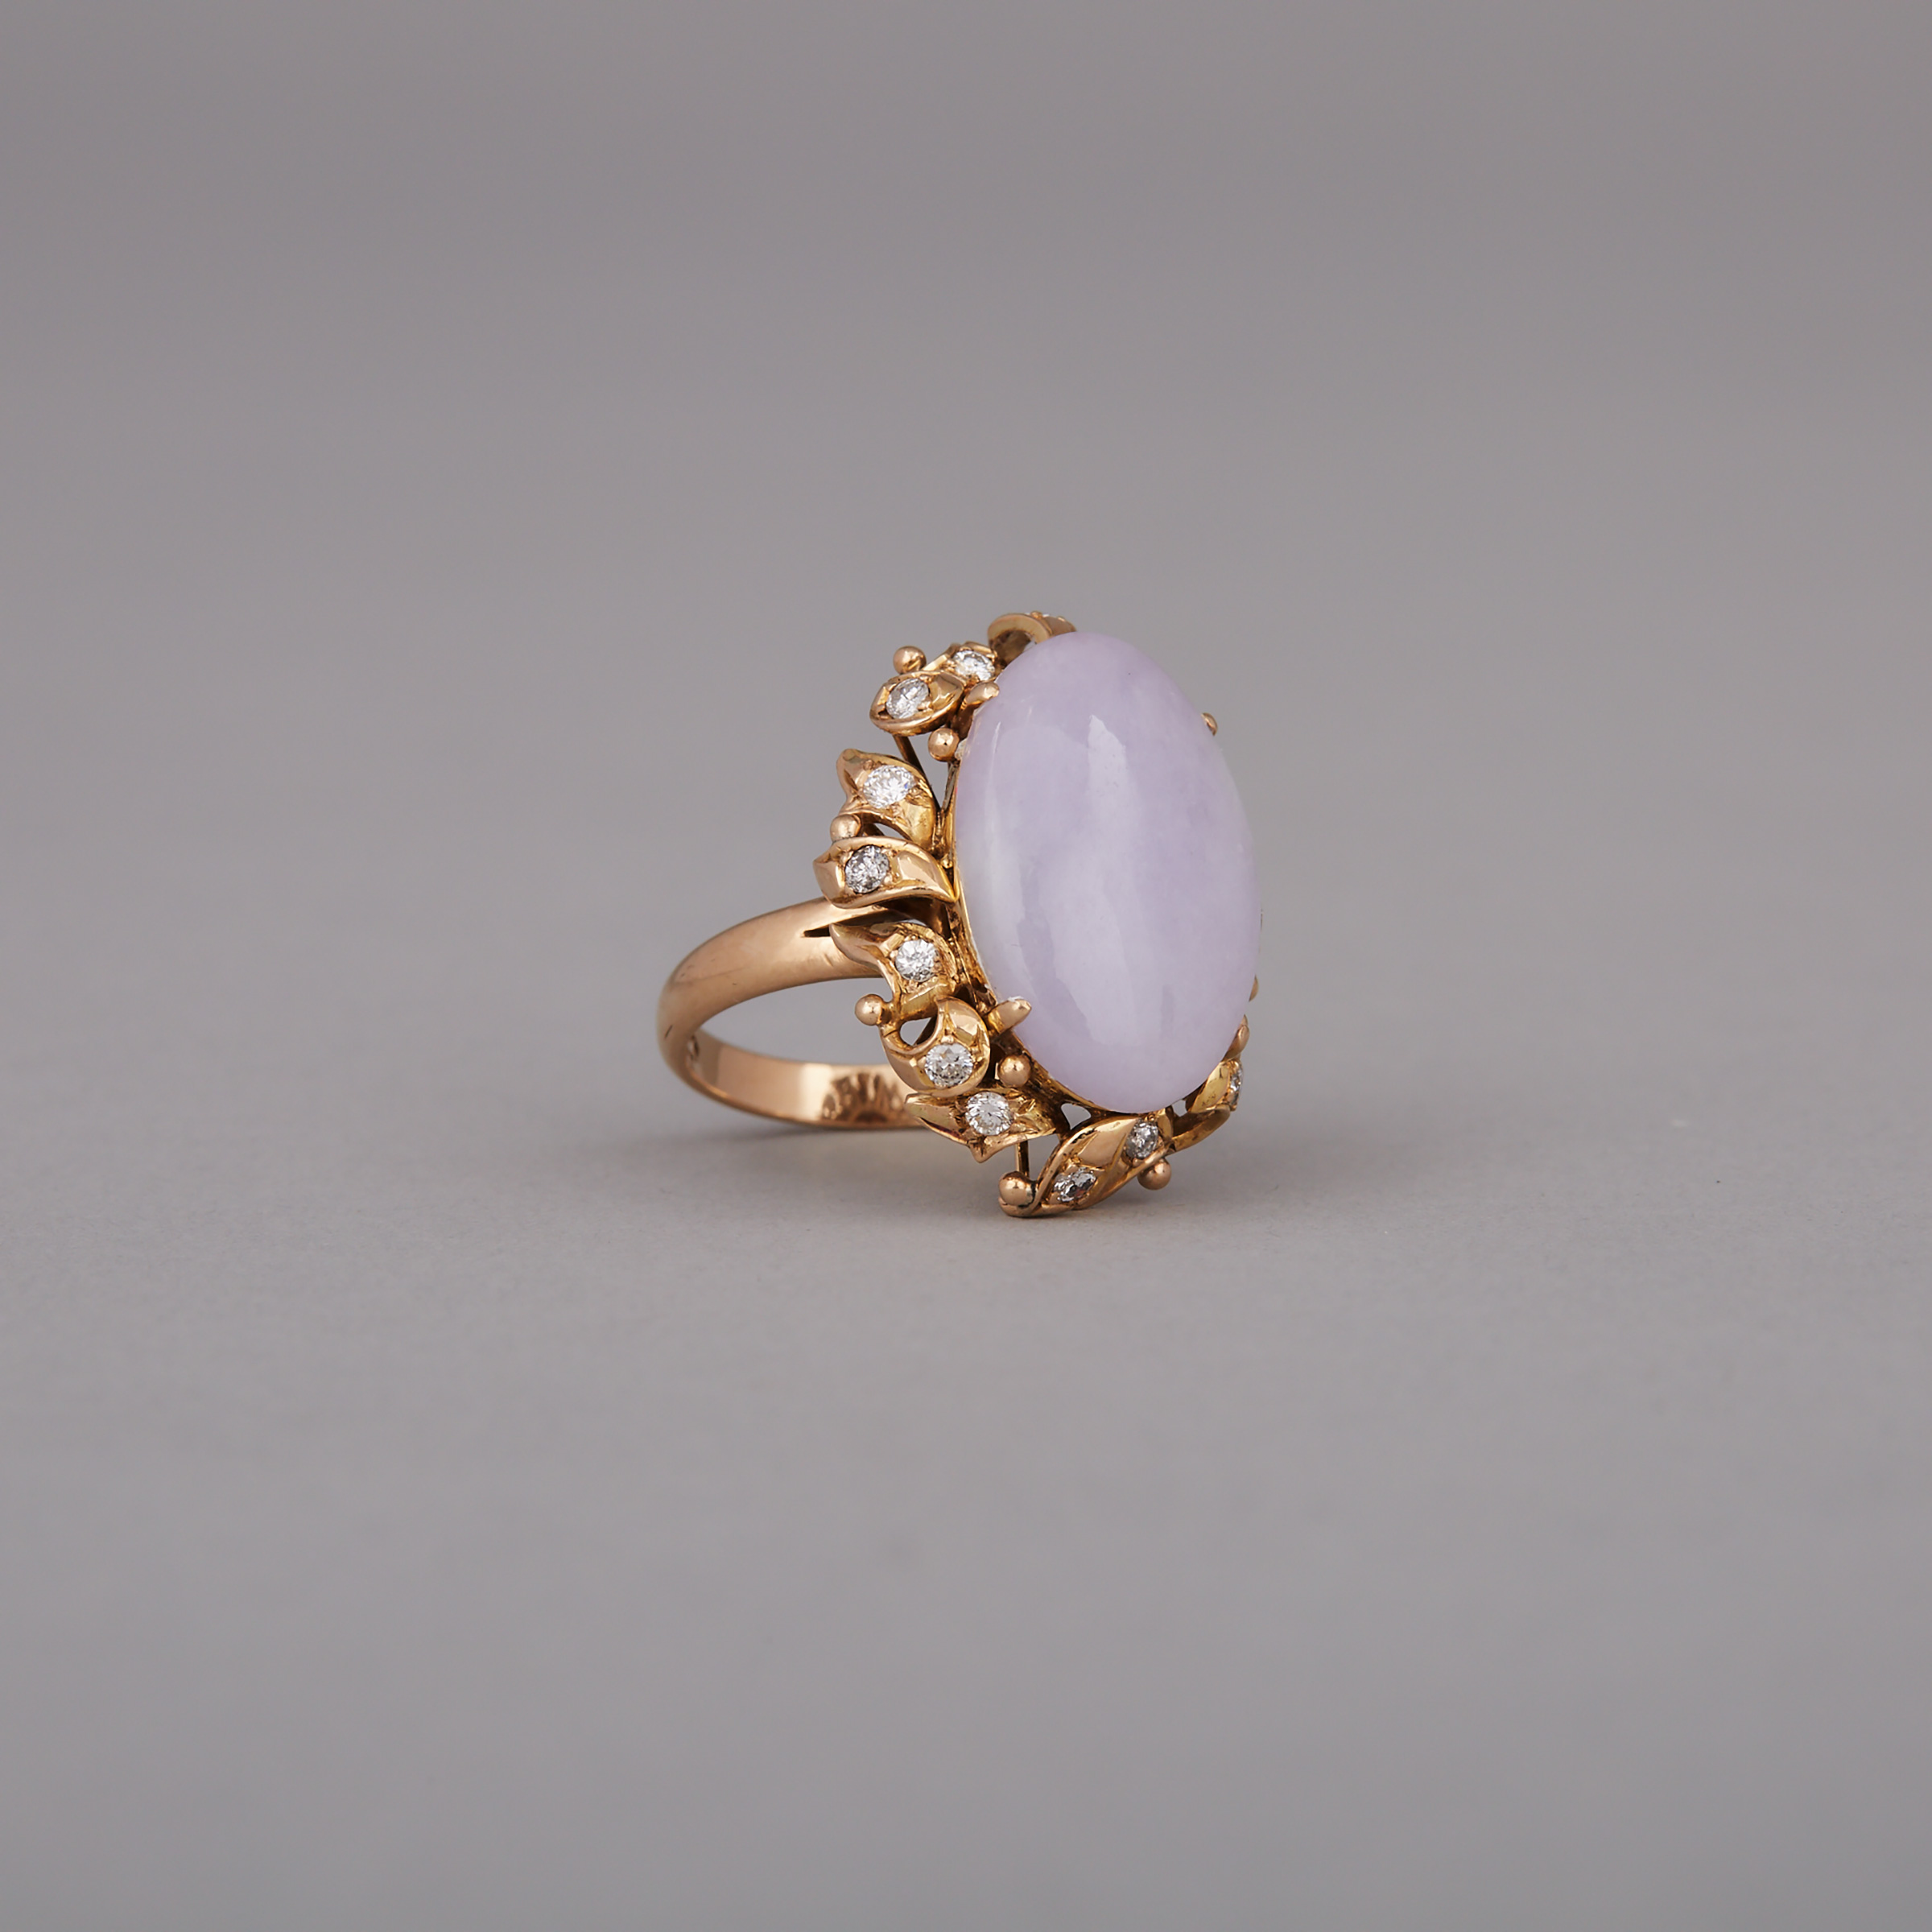 A Vintage Violet Jadeite Cabochon, 14k Gold and Diamond Cocktail Ring